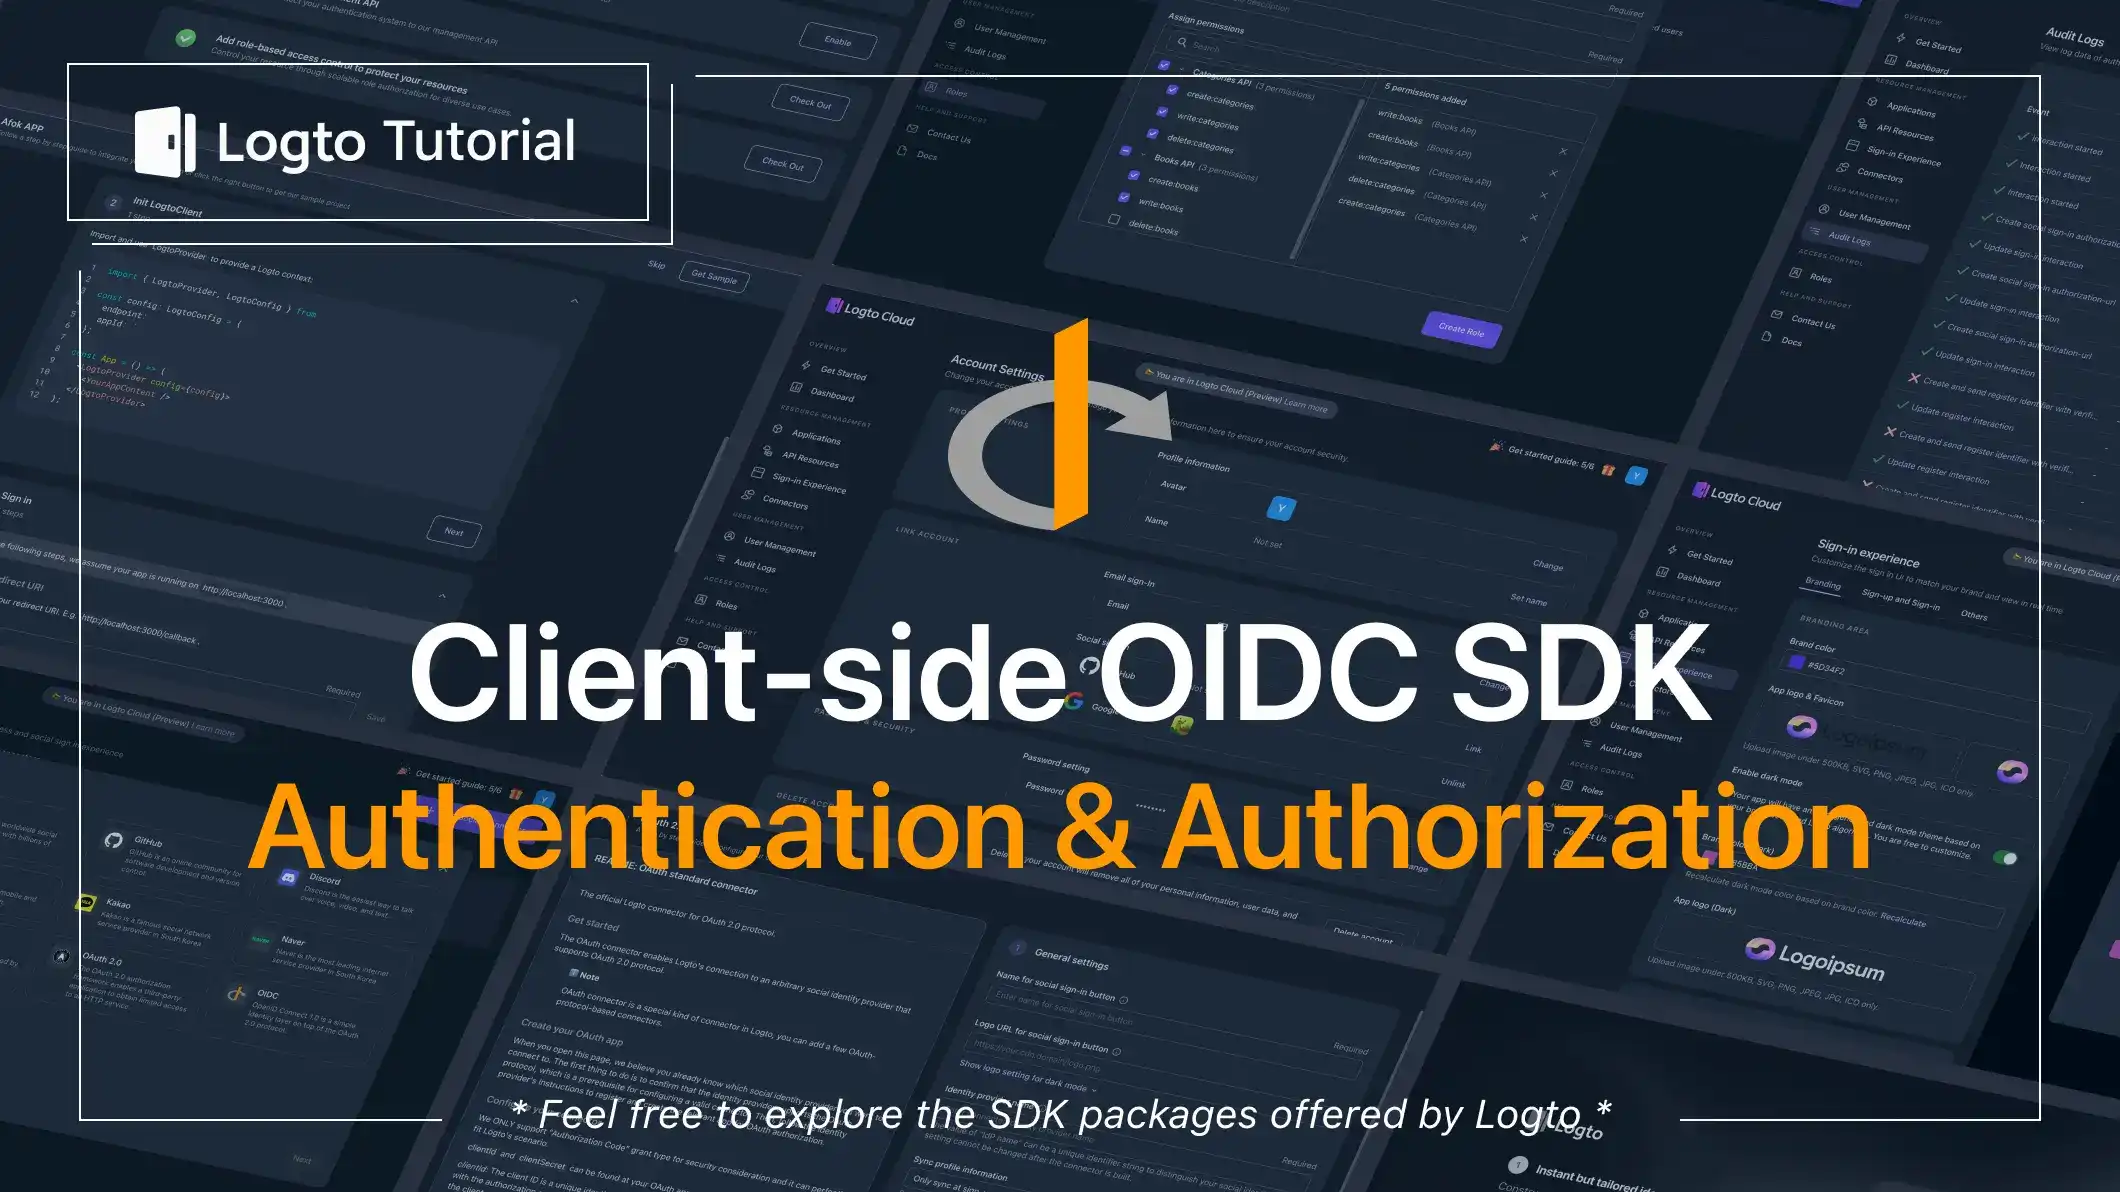 Implement a simple client-side OIDC SDK